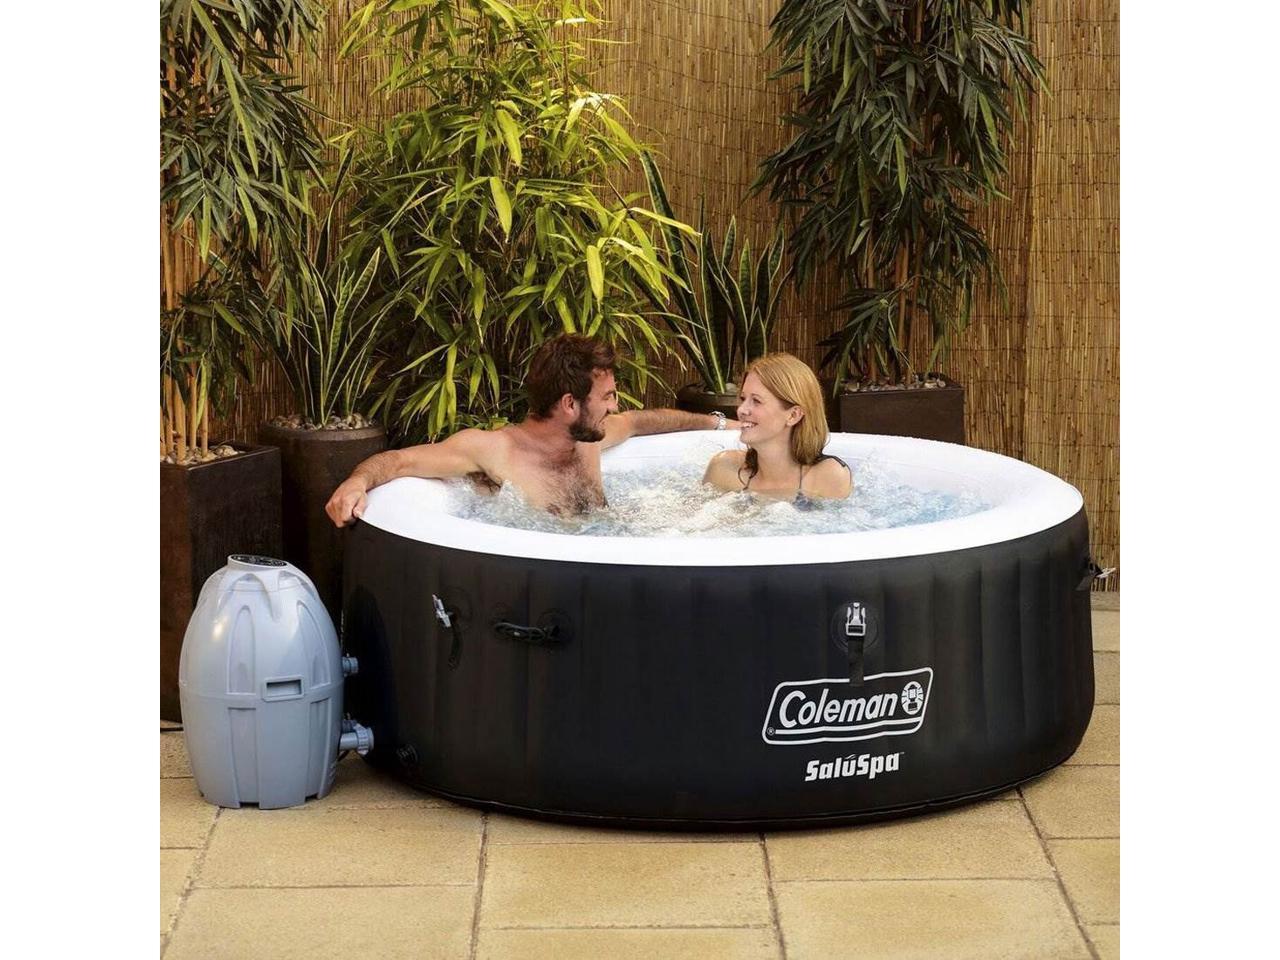 Coleman Saluspa Inflatable Hot Tub Portable Hot Tub W Heated Water My